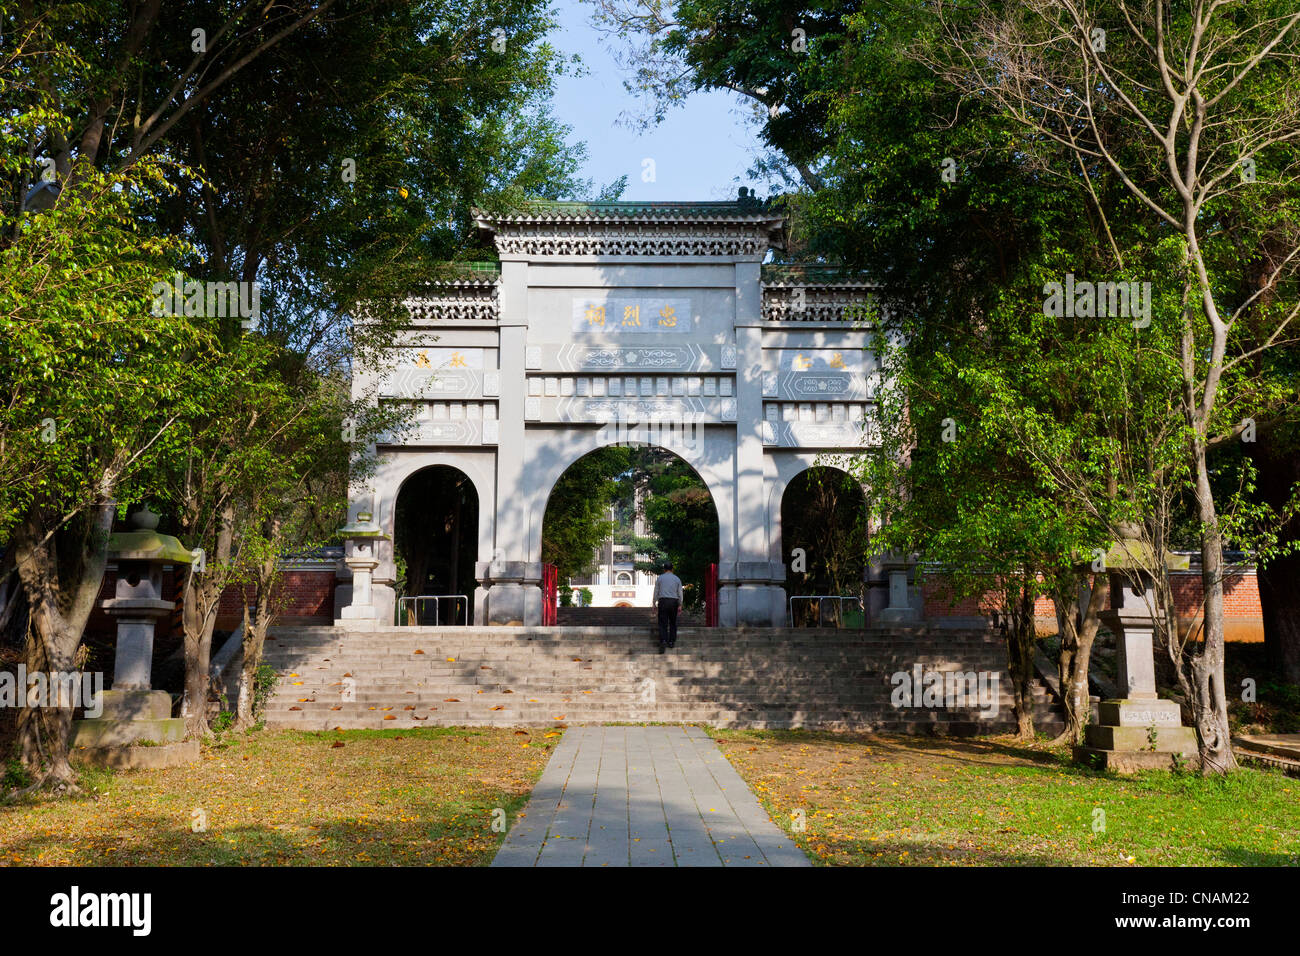 Archway in Chiayi Park, Chiayi, Taiwan. JMH5941 Stock Photo